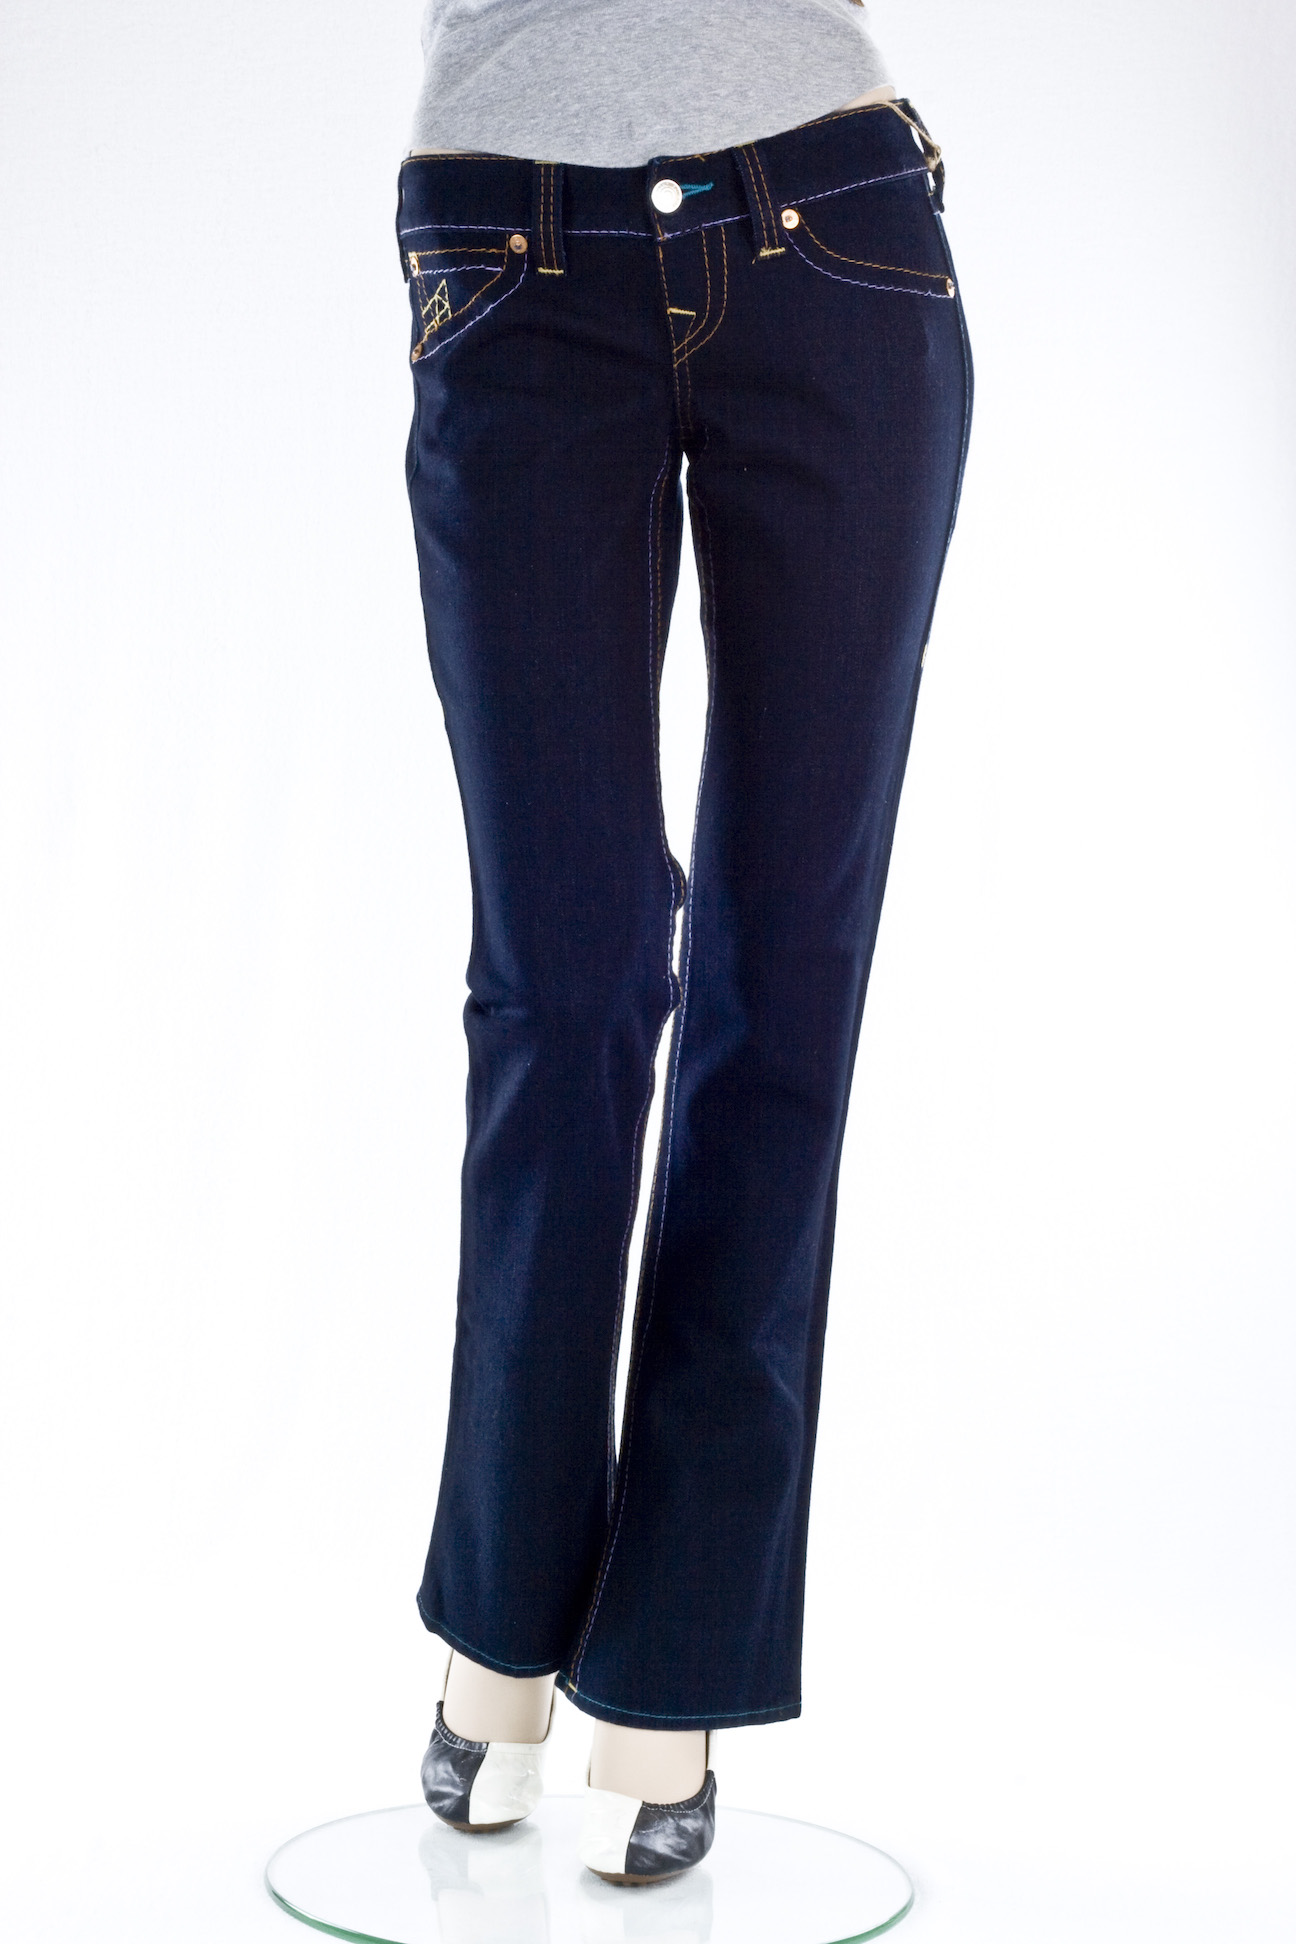 Женские джинсы True Religion "Буткат-клеш" ROCKSTAR BILLY DEEP BLUE интернет-магазин Fashion Jeans